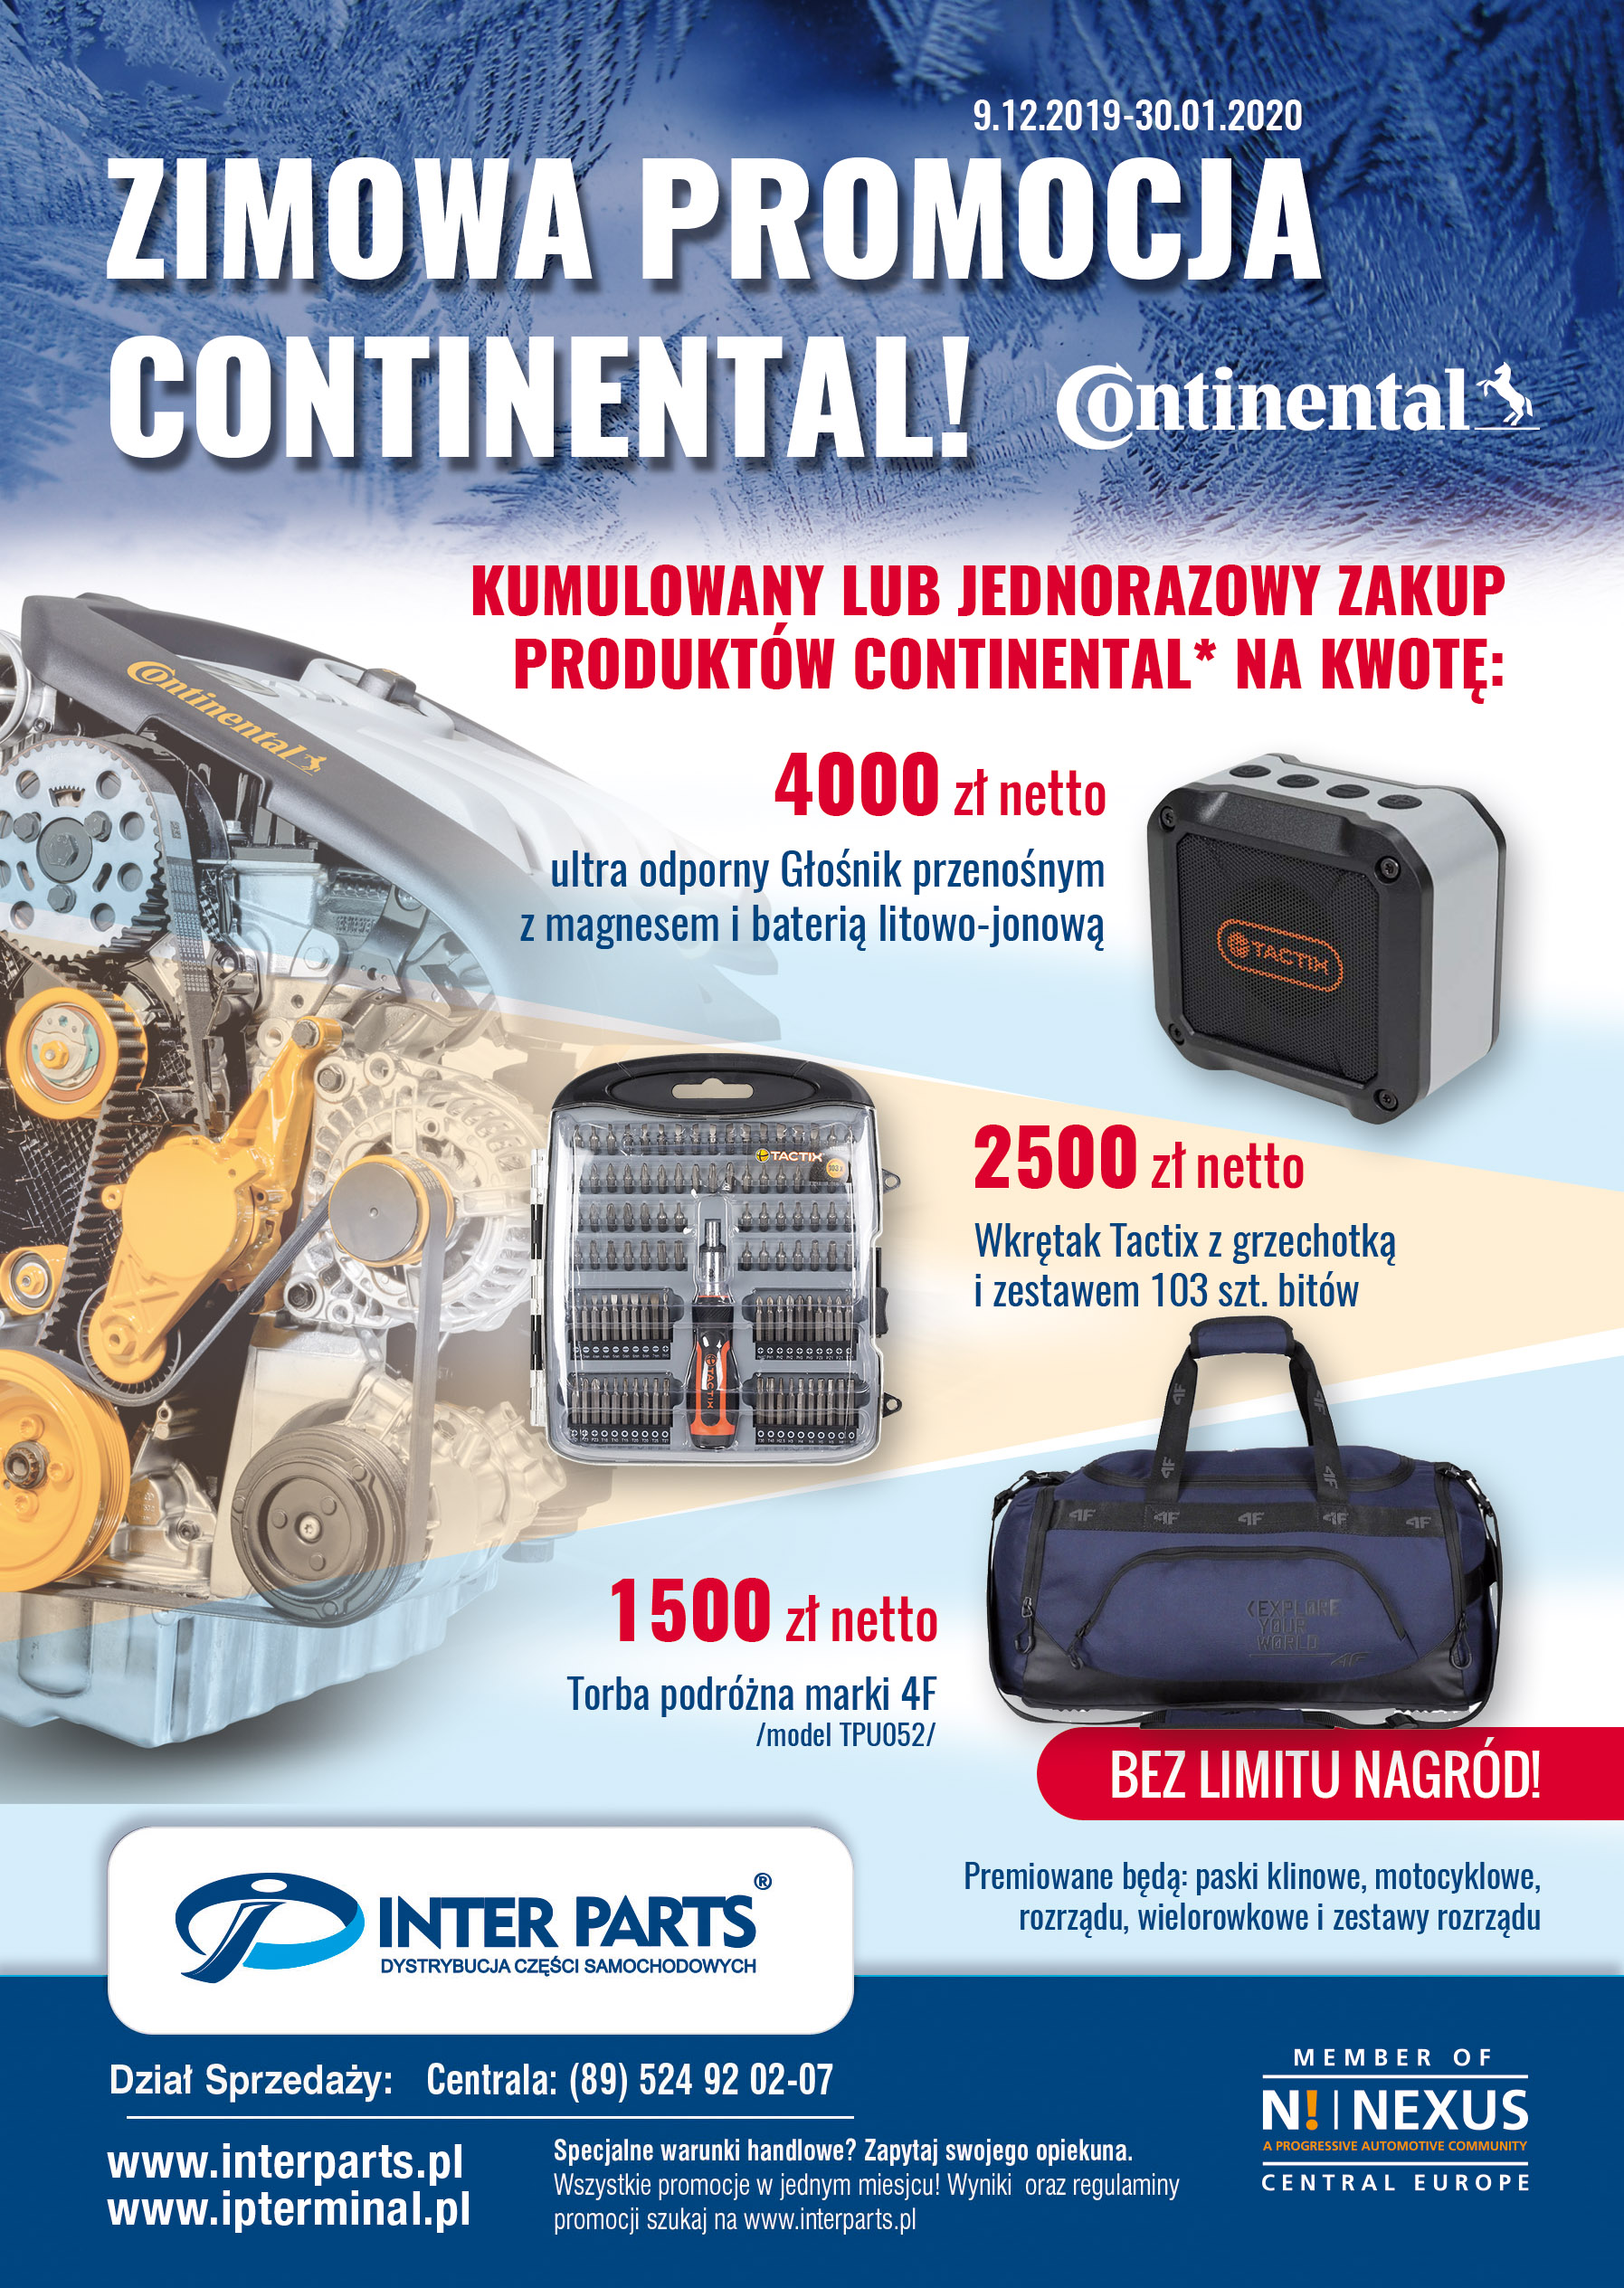 Zimowa promocja Continental